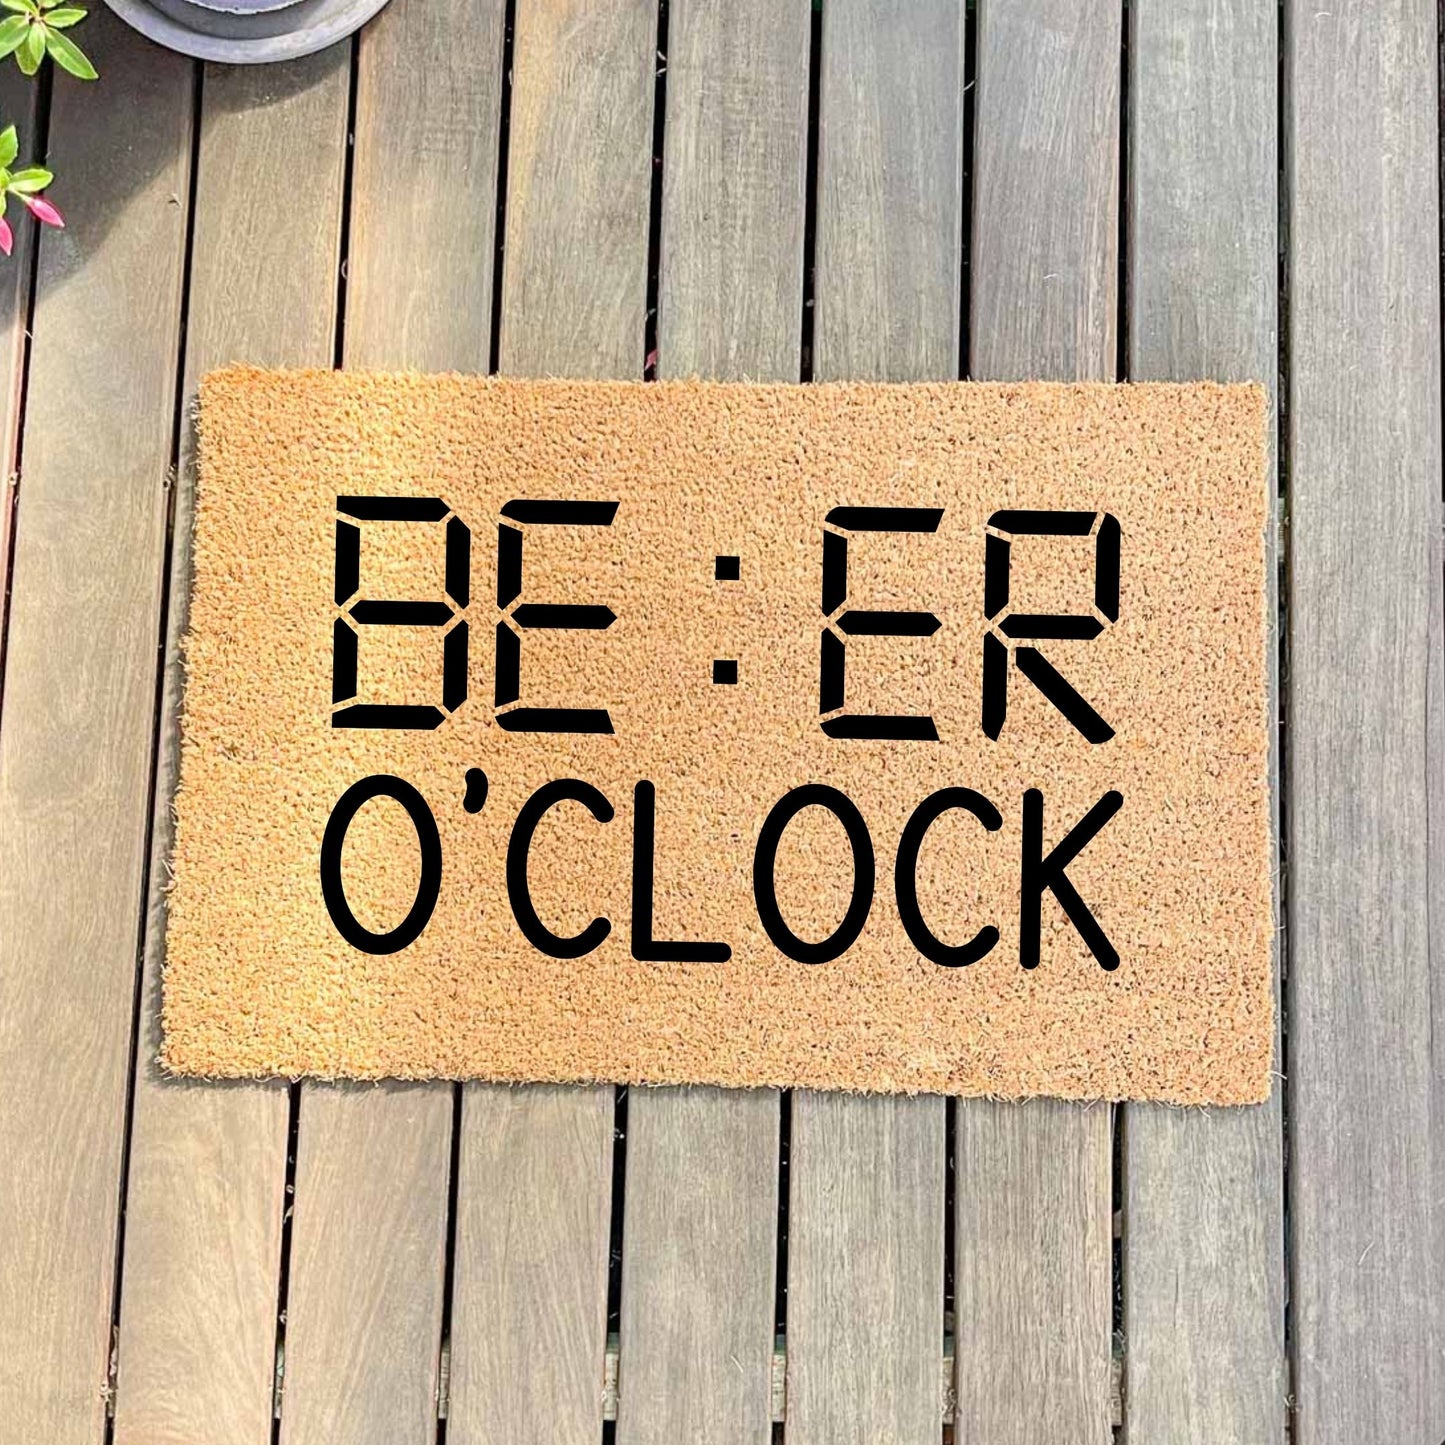 Beer O'Clock doormat, fathers day gift, gifts for him, birthday gift, dad doormat, grandpa doormat